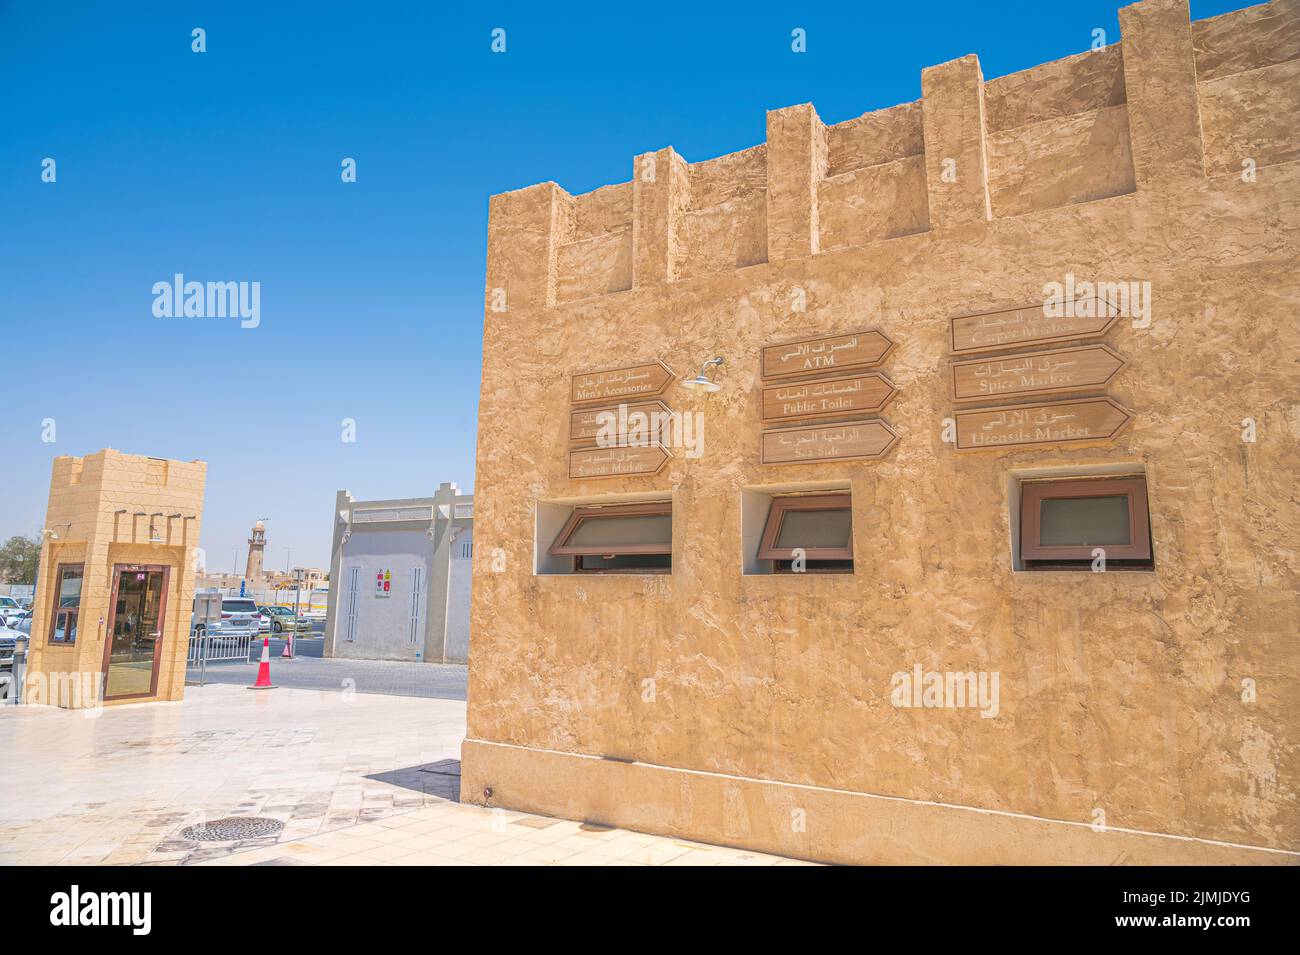 Al Wakrah Souq located near Qatar Stadiums 2022 for FIFA World Cup Stock Photo